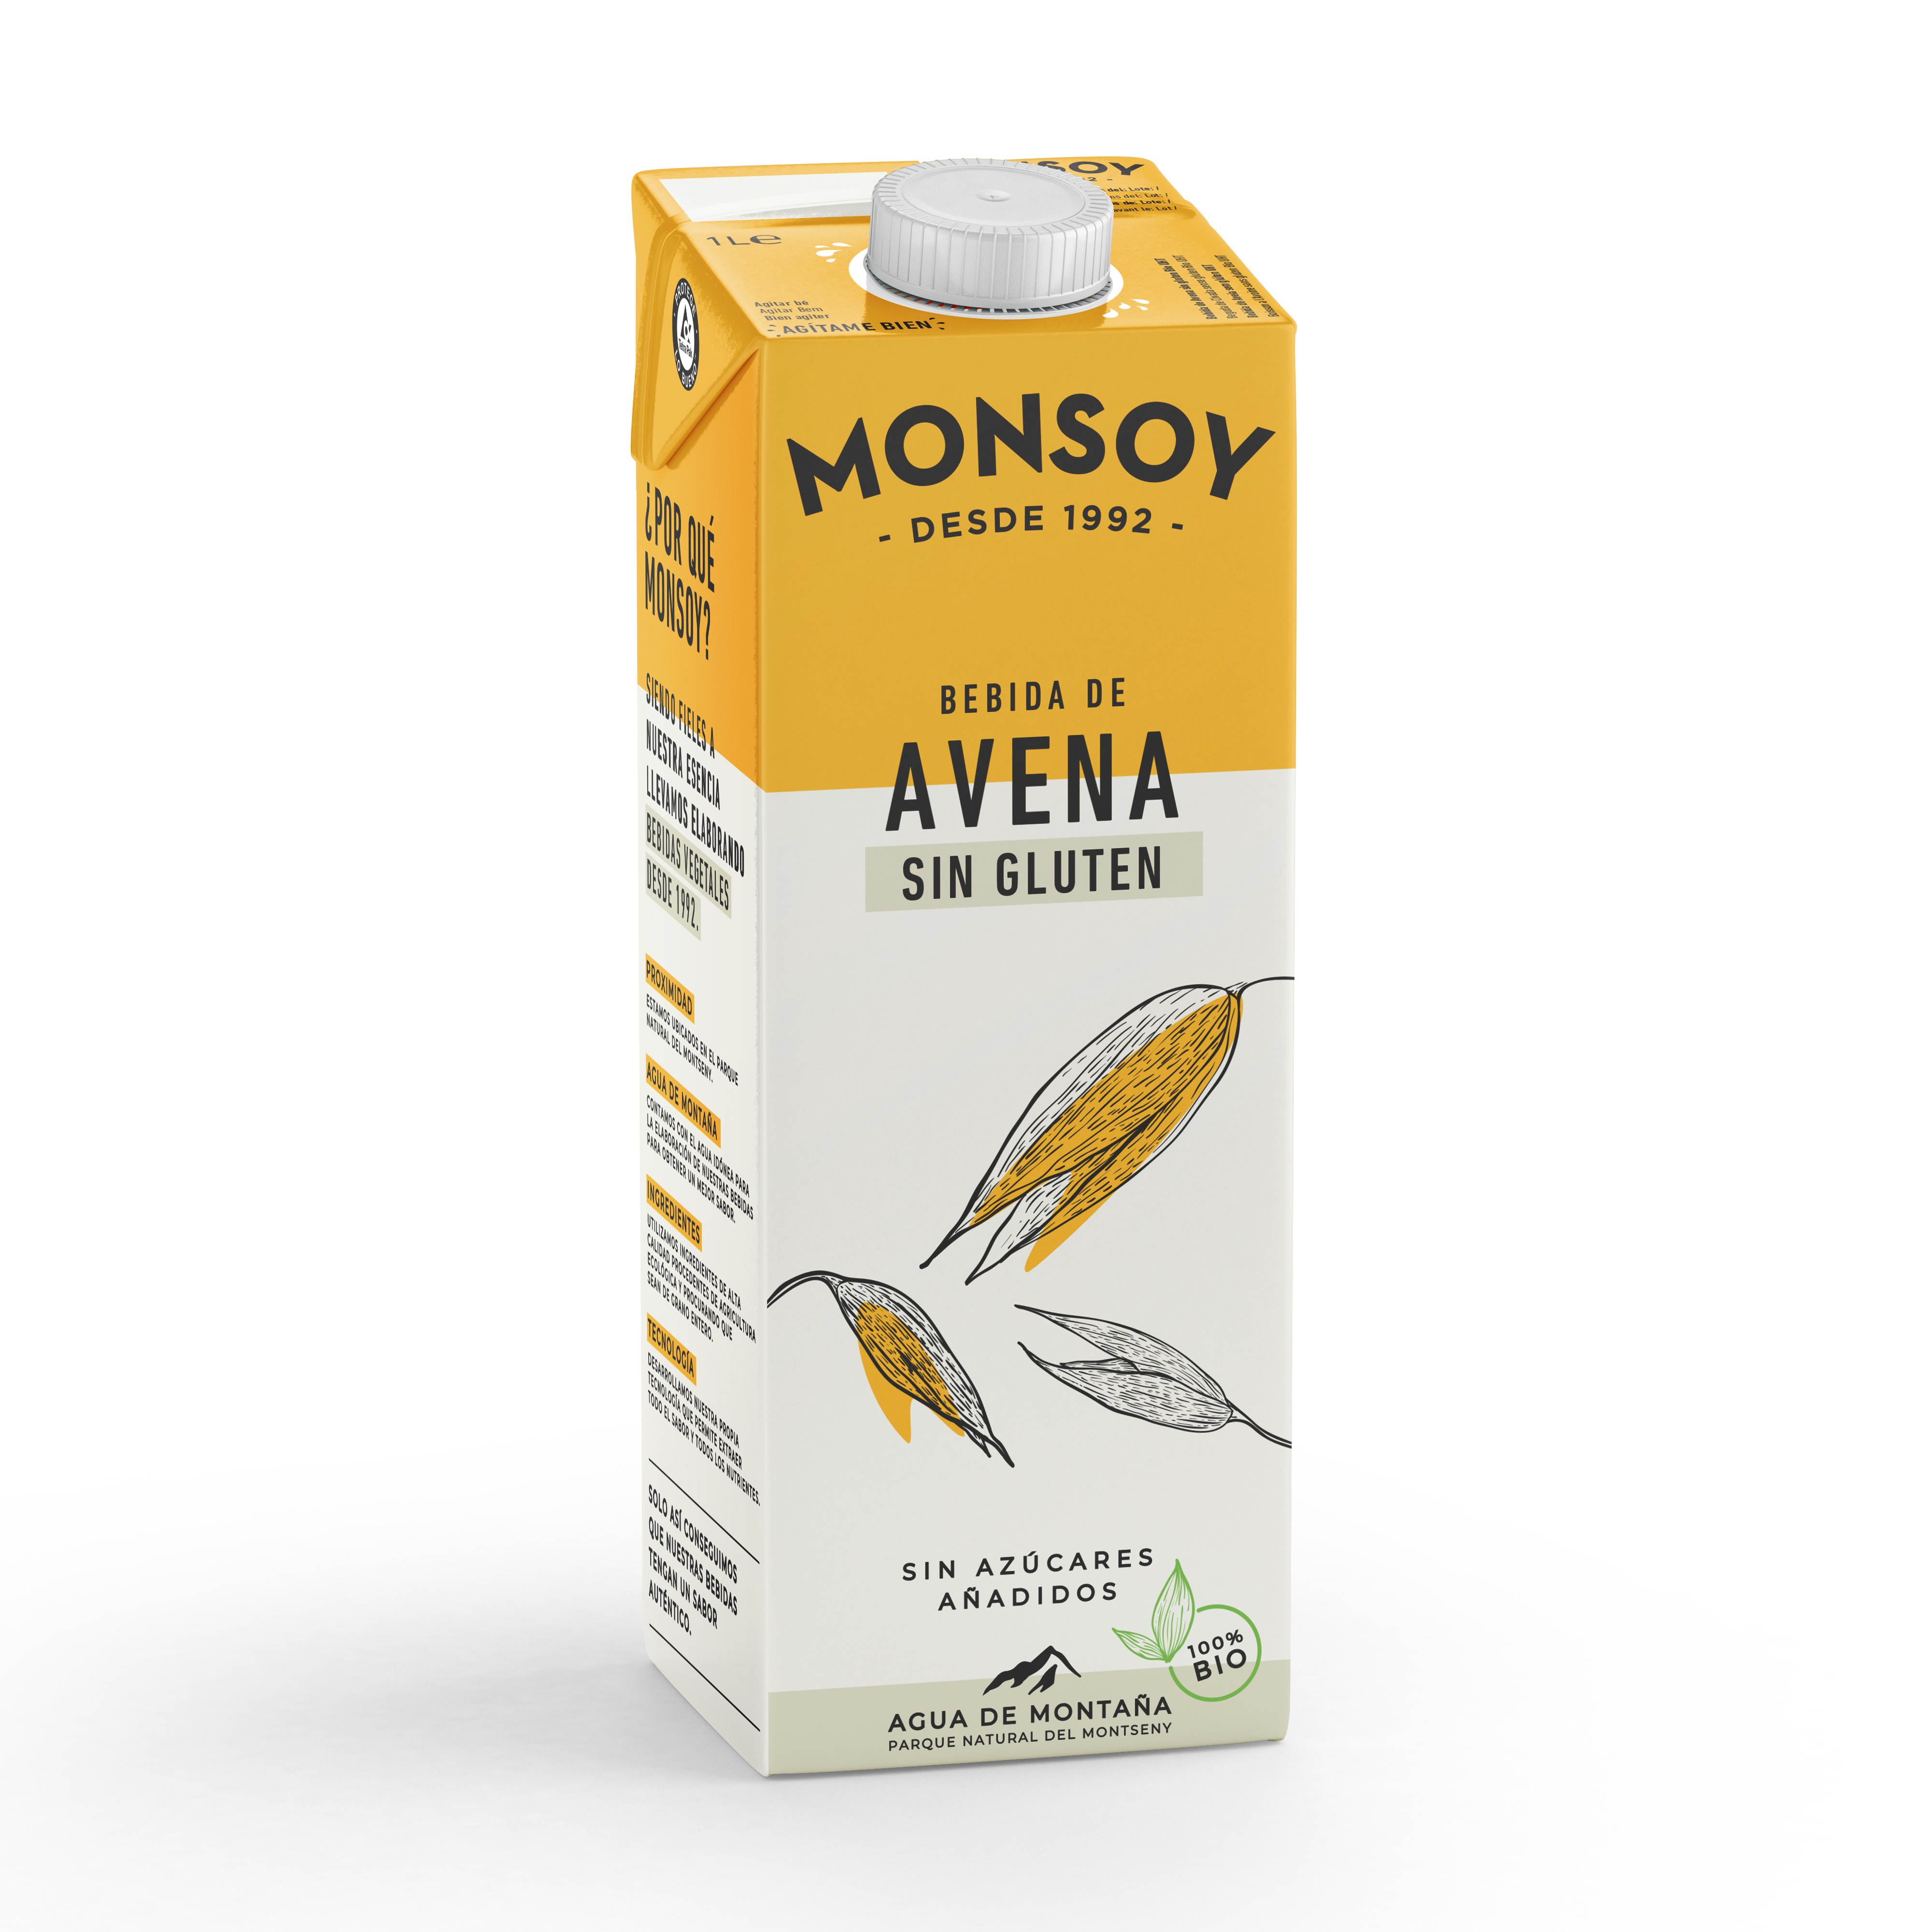 Bautura ovaz Monsoy (fara gluten) BIO - 1 litru imagine produs 2021 Monsoy